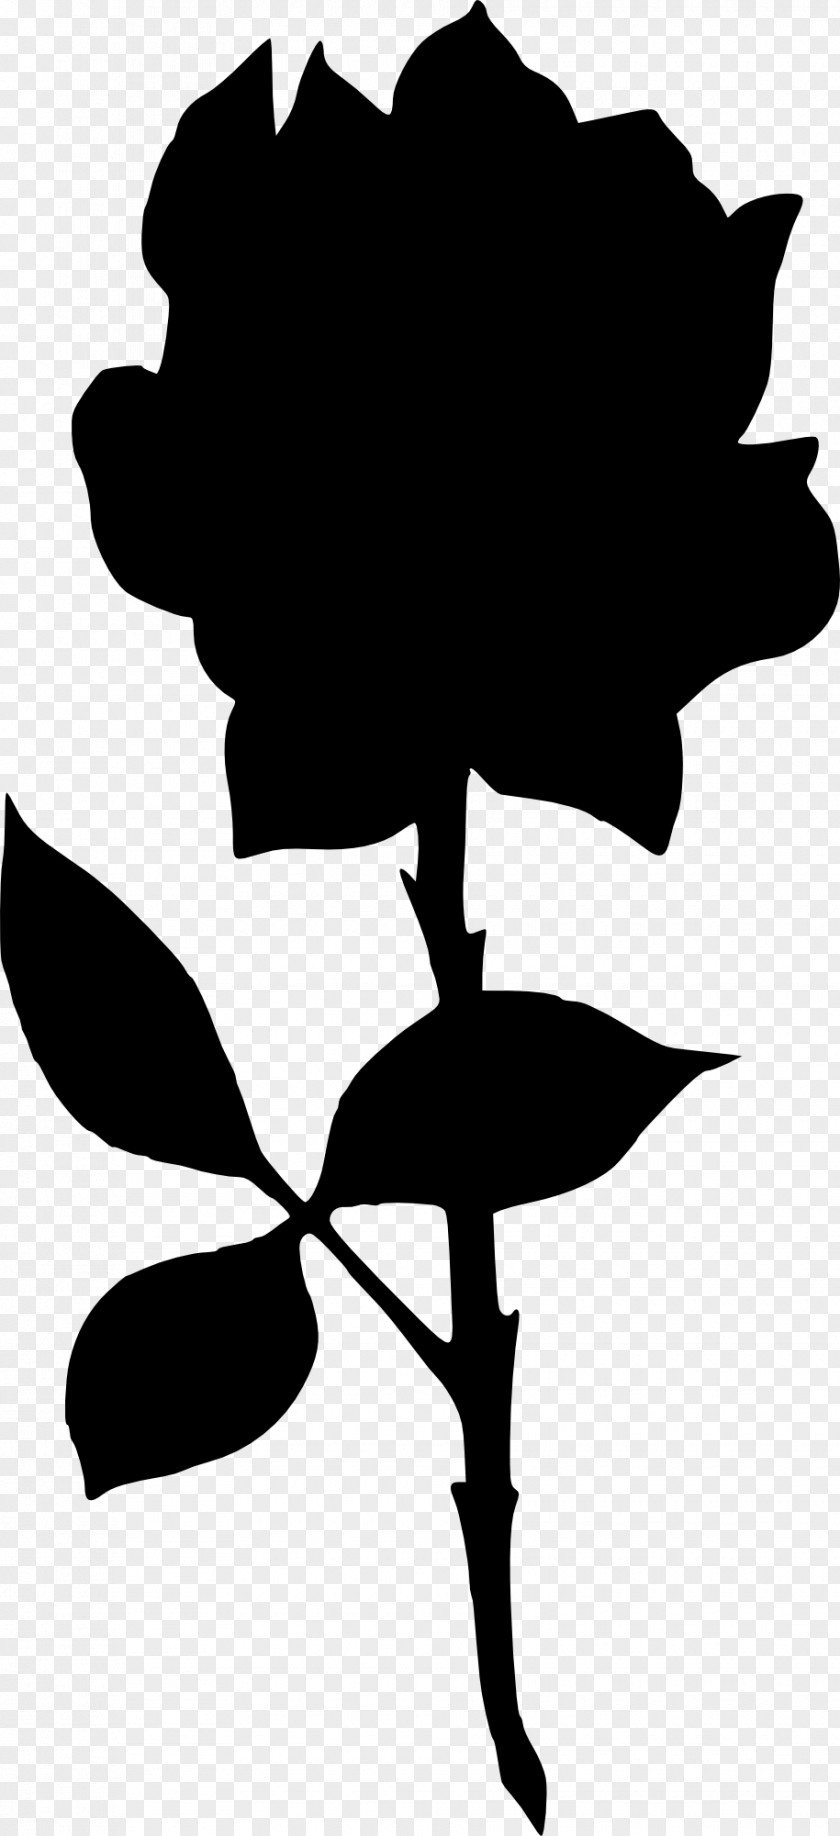 Magnolia Silhouette Vector Graphics Clip Art Image PNG